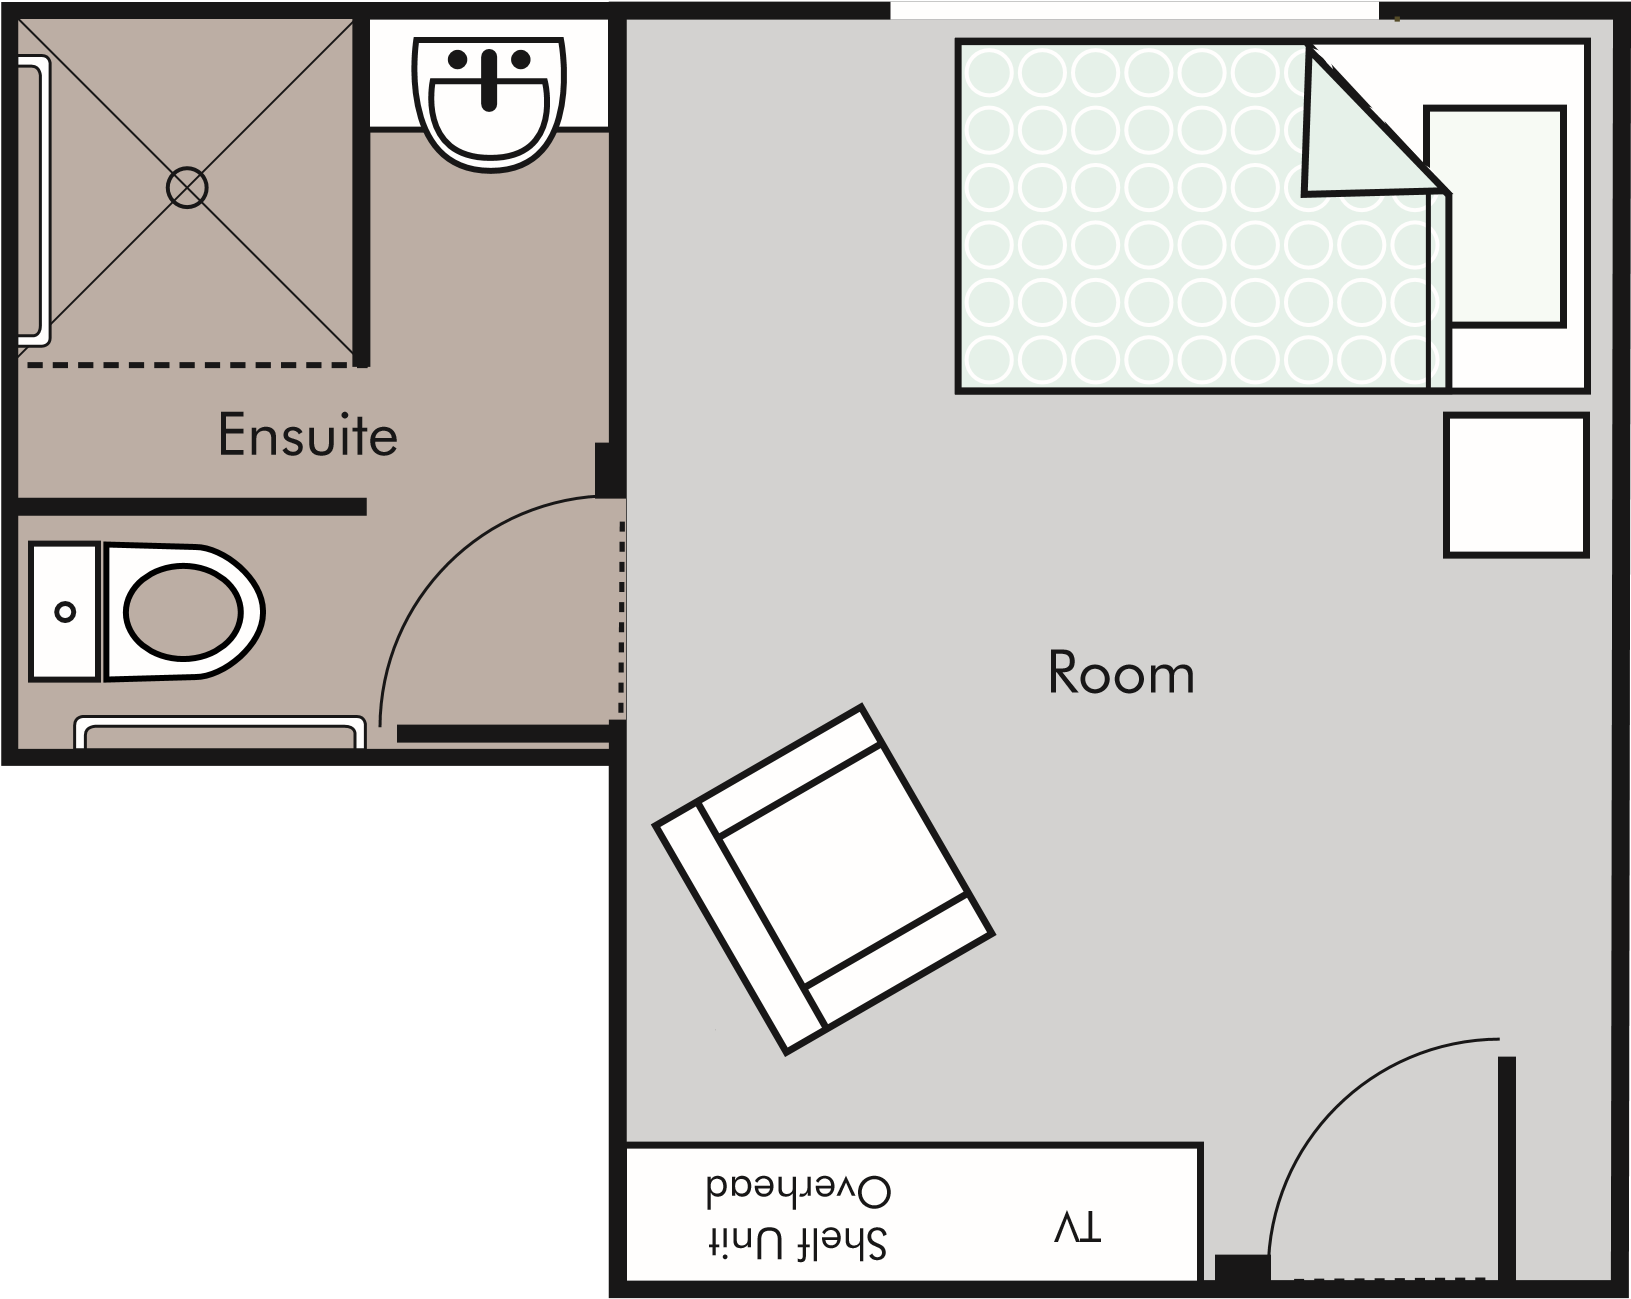 Deluxe Room with Ensuite Dementia Specific Room